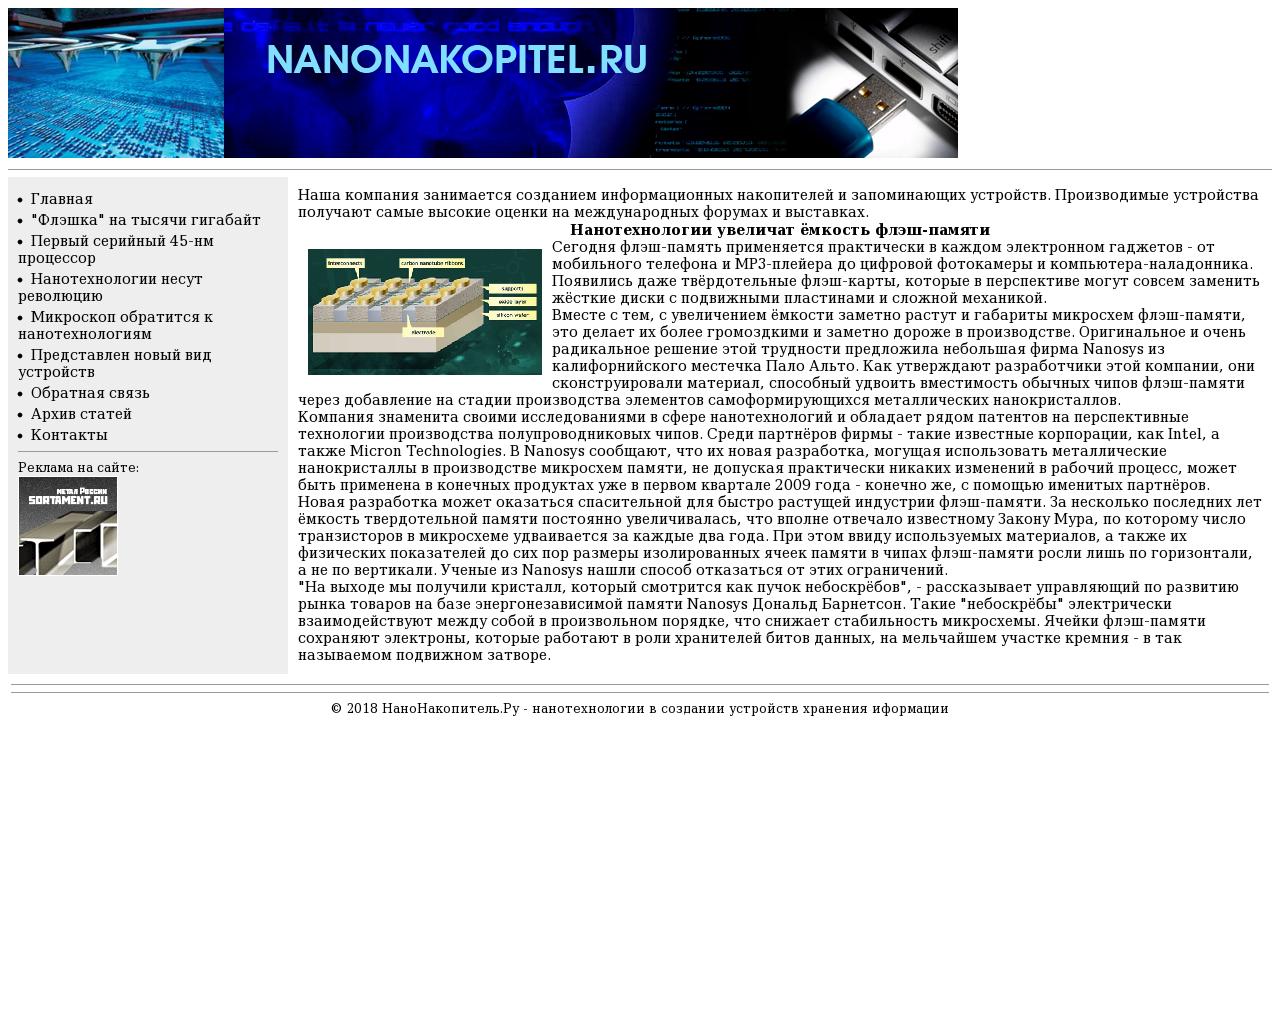 Изображение сайта nanonakopitel.ru в разрешении 1280x1024